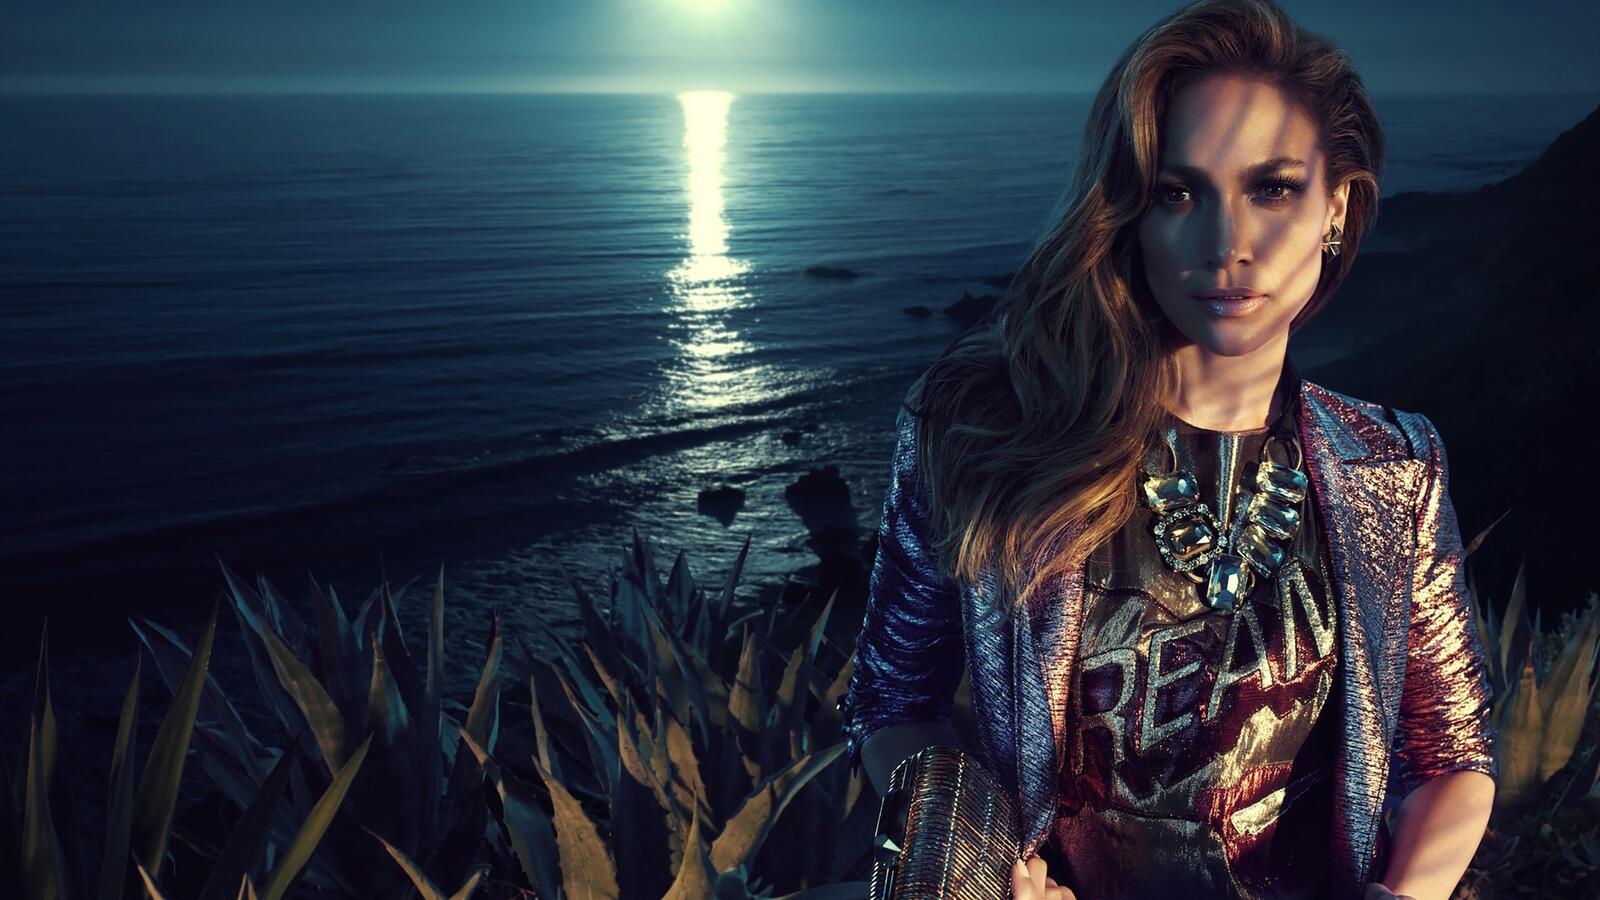 Wallpapers Jennifer Lopez singer moonlight on the desktop